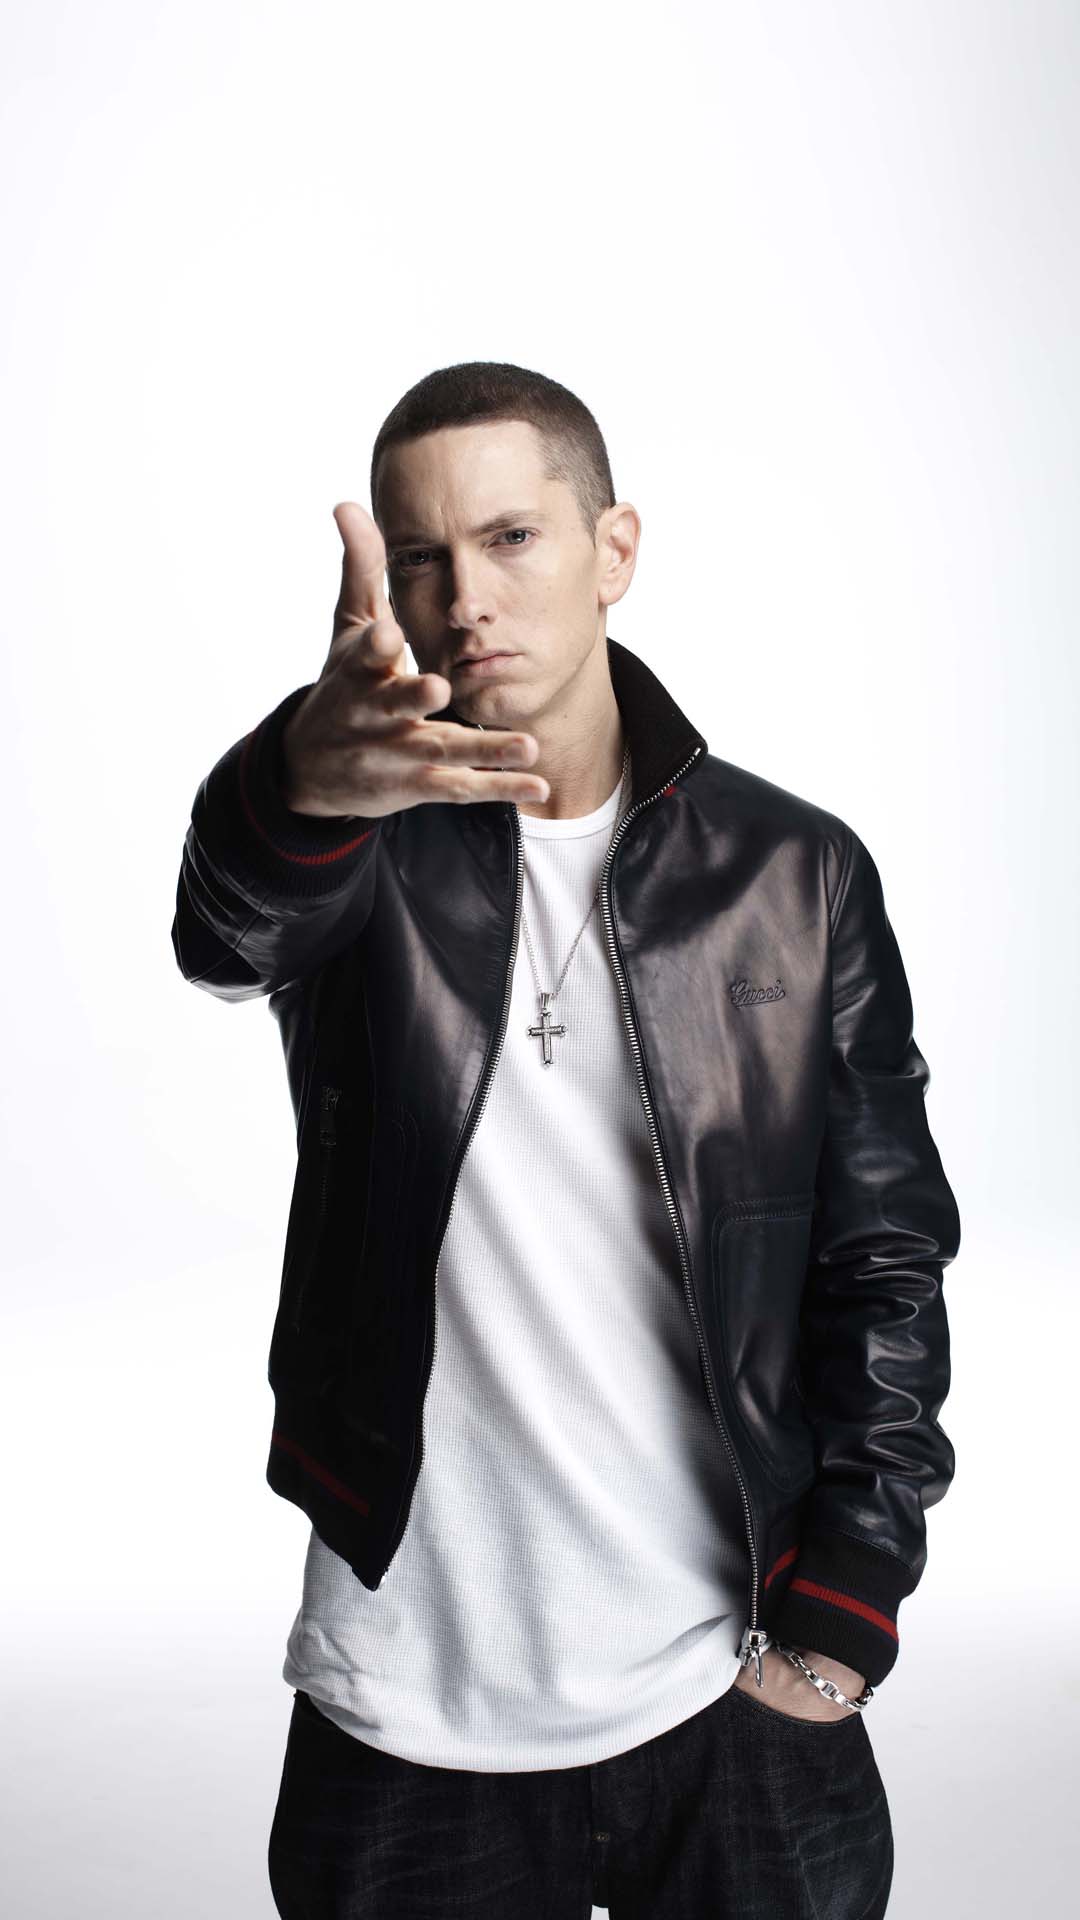 Eminem Wallpapers  Top 35 Best Eminem Wallpapers Download